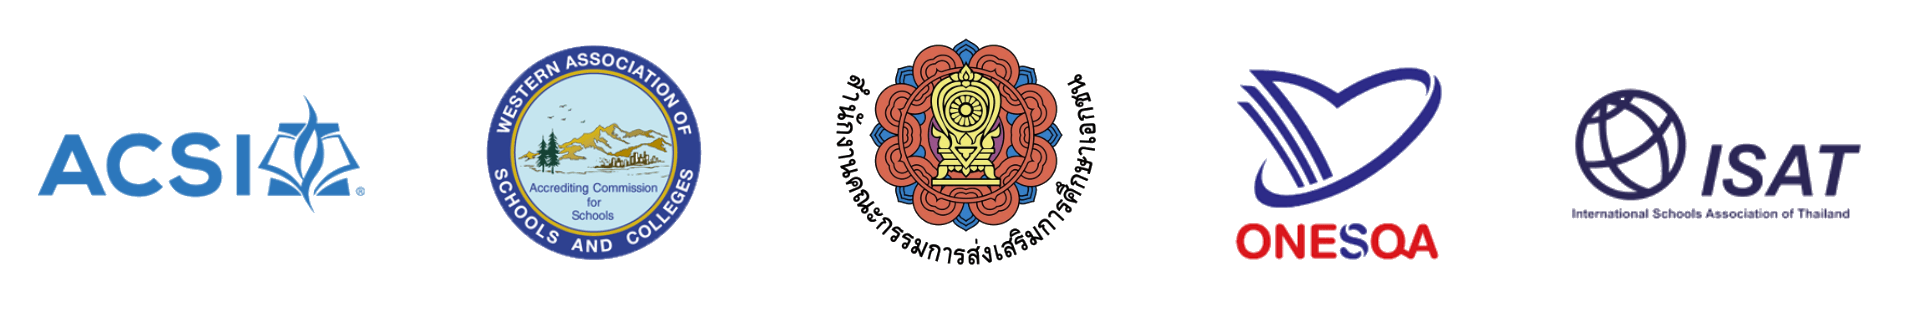 Crics Logo - Chiang Rai International Christian School – A Family Learning Community